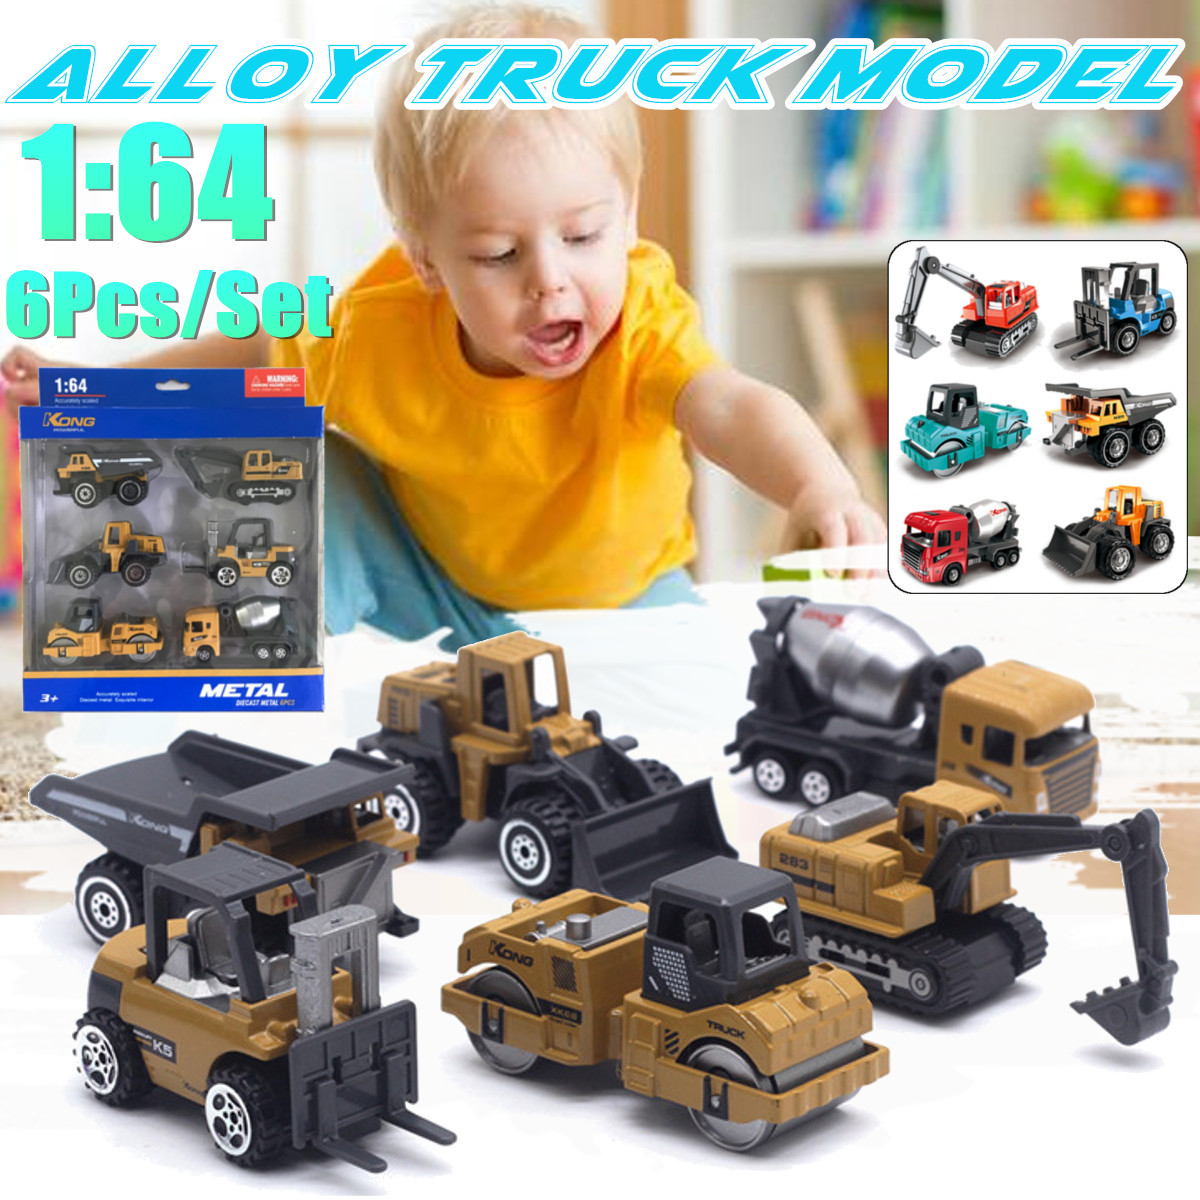 6-PCS-164-Alloy-Trcuk-Classic-Colorful-Car-Diecast-Model-Toys-Set-for-Kids-Gift-1617627-1